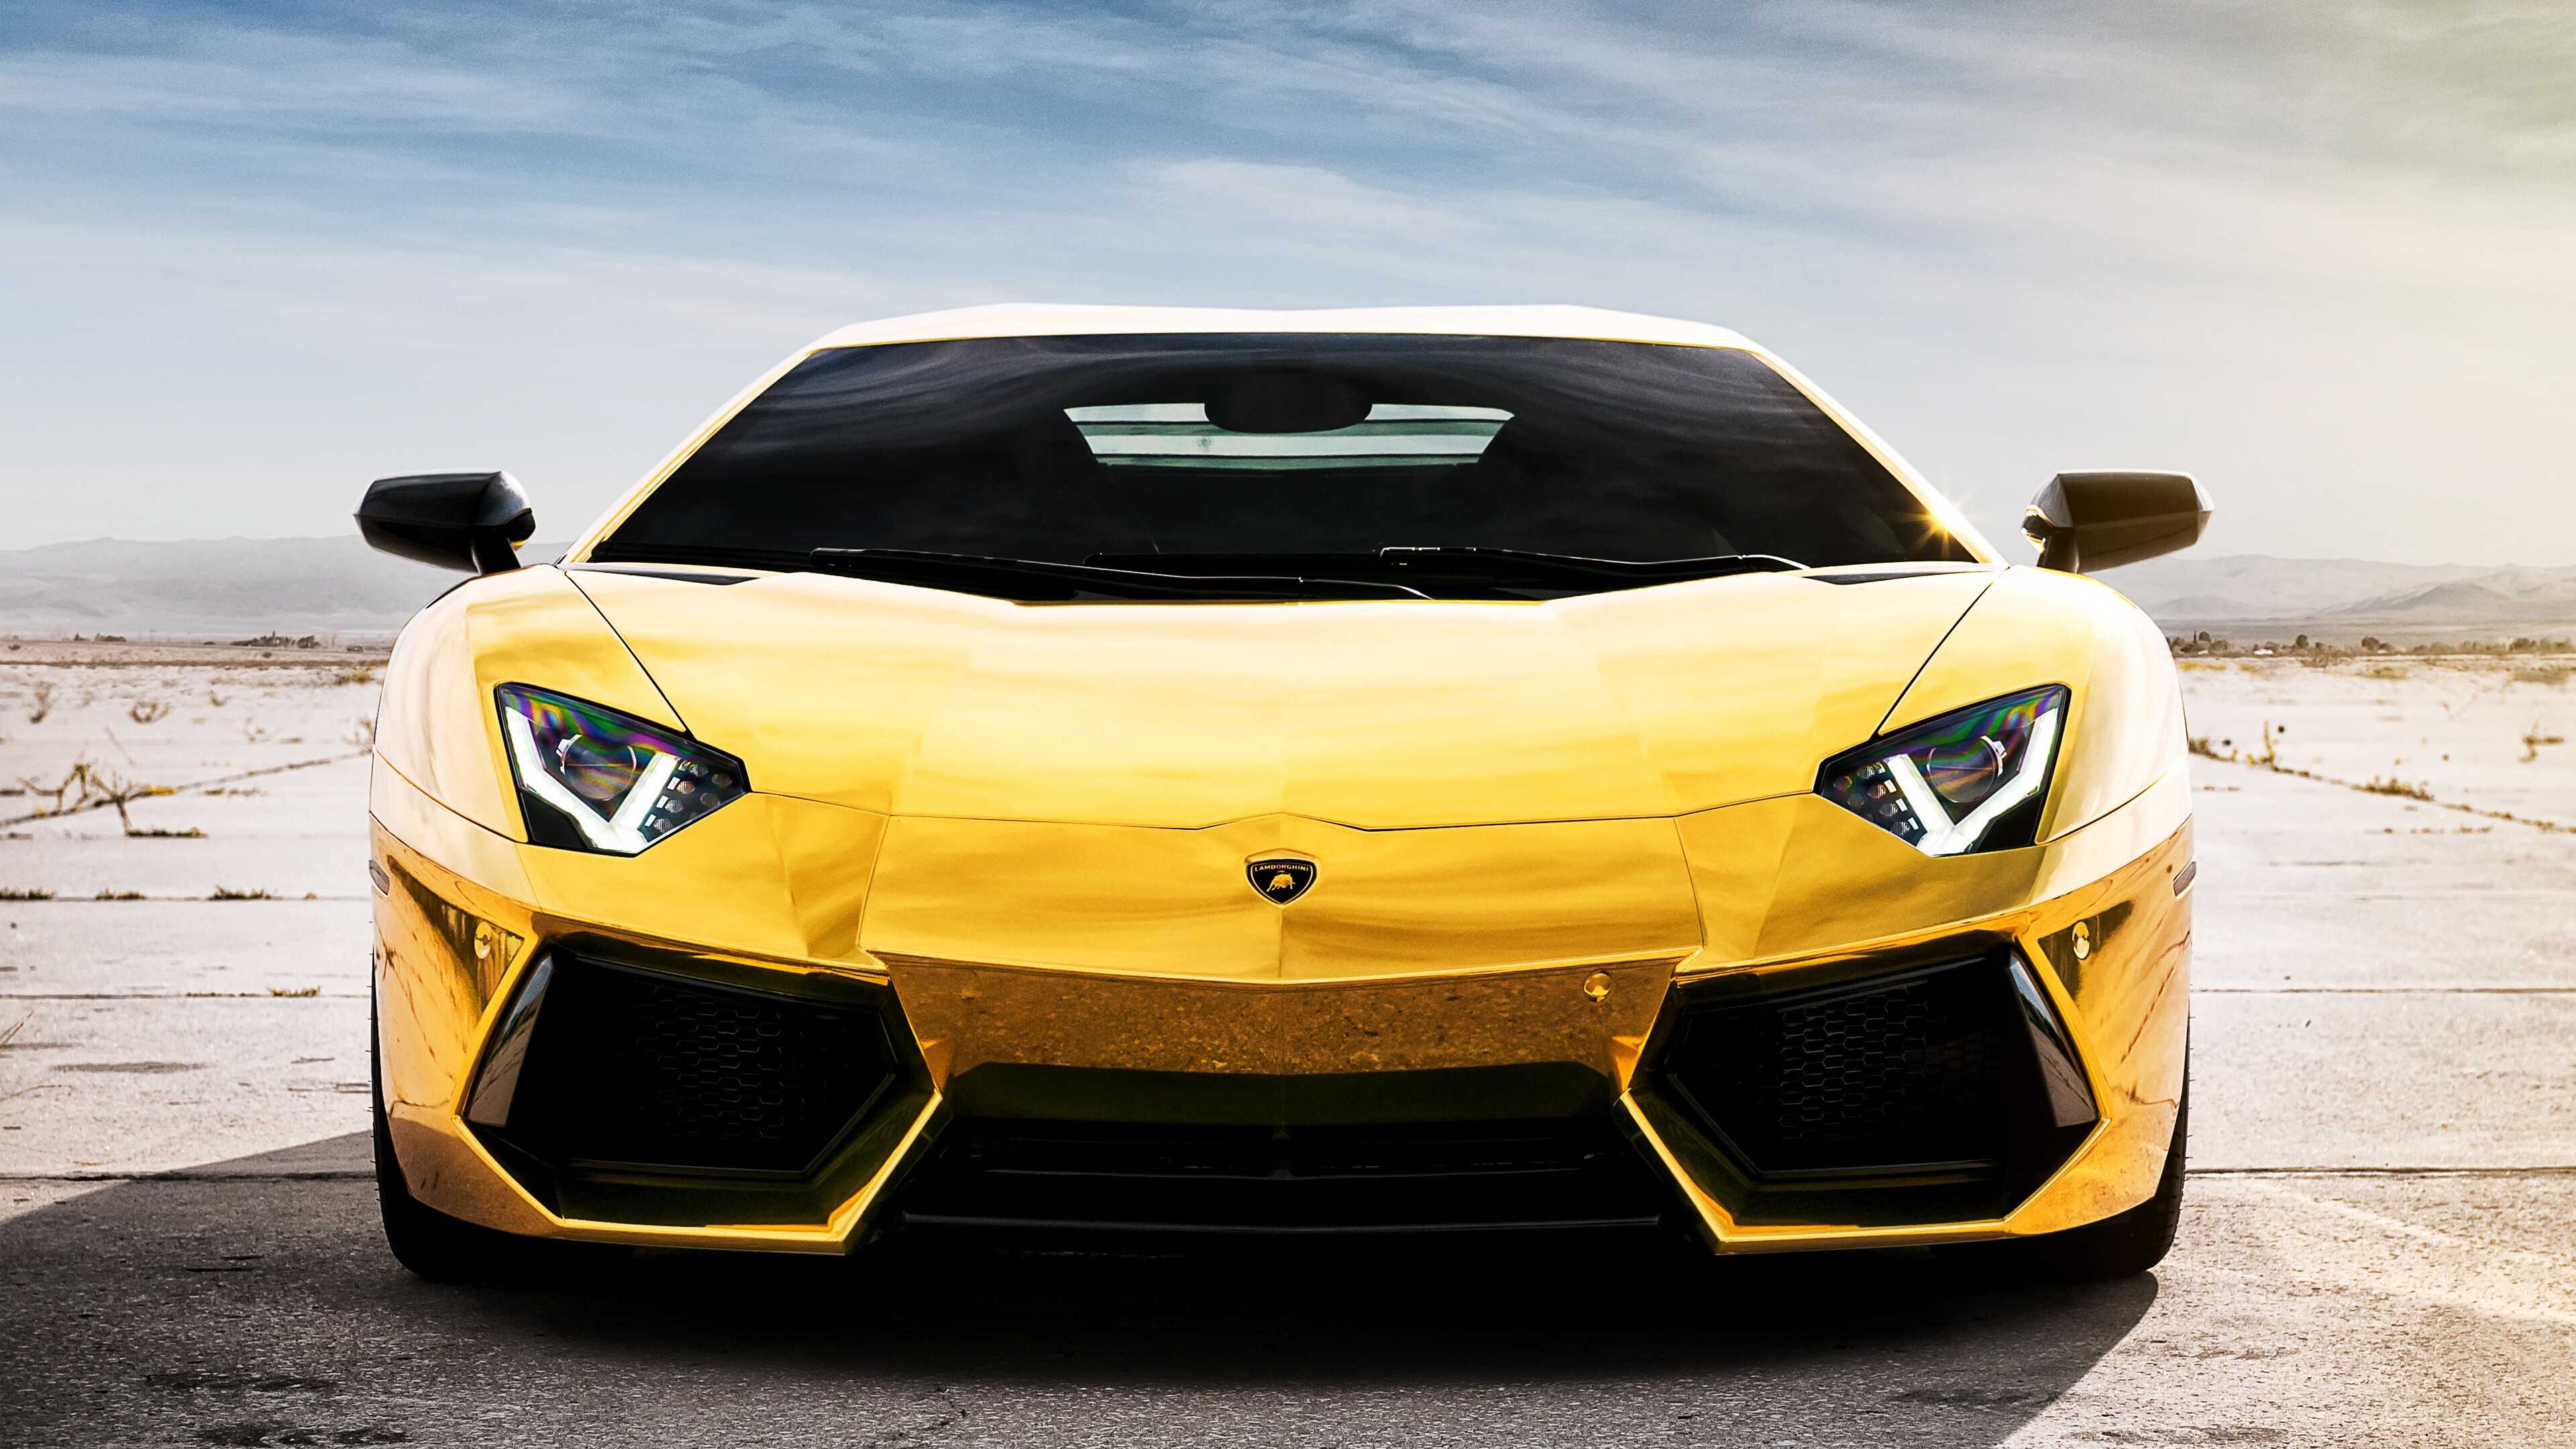 Lamborghini: Supercar, American Chrysler Corporation took control of the company in 1987. 3840x2160 4K Wallpaper.